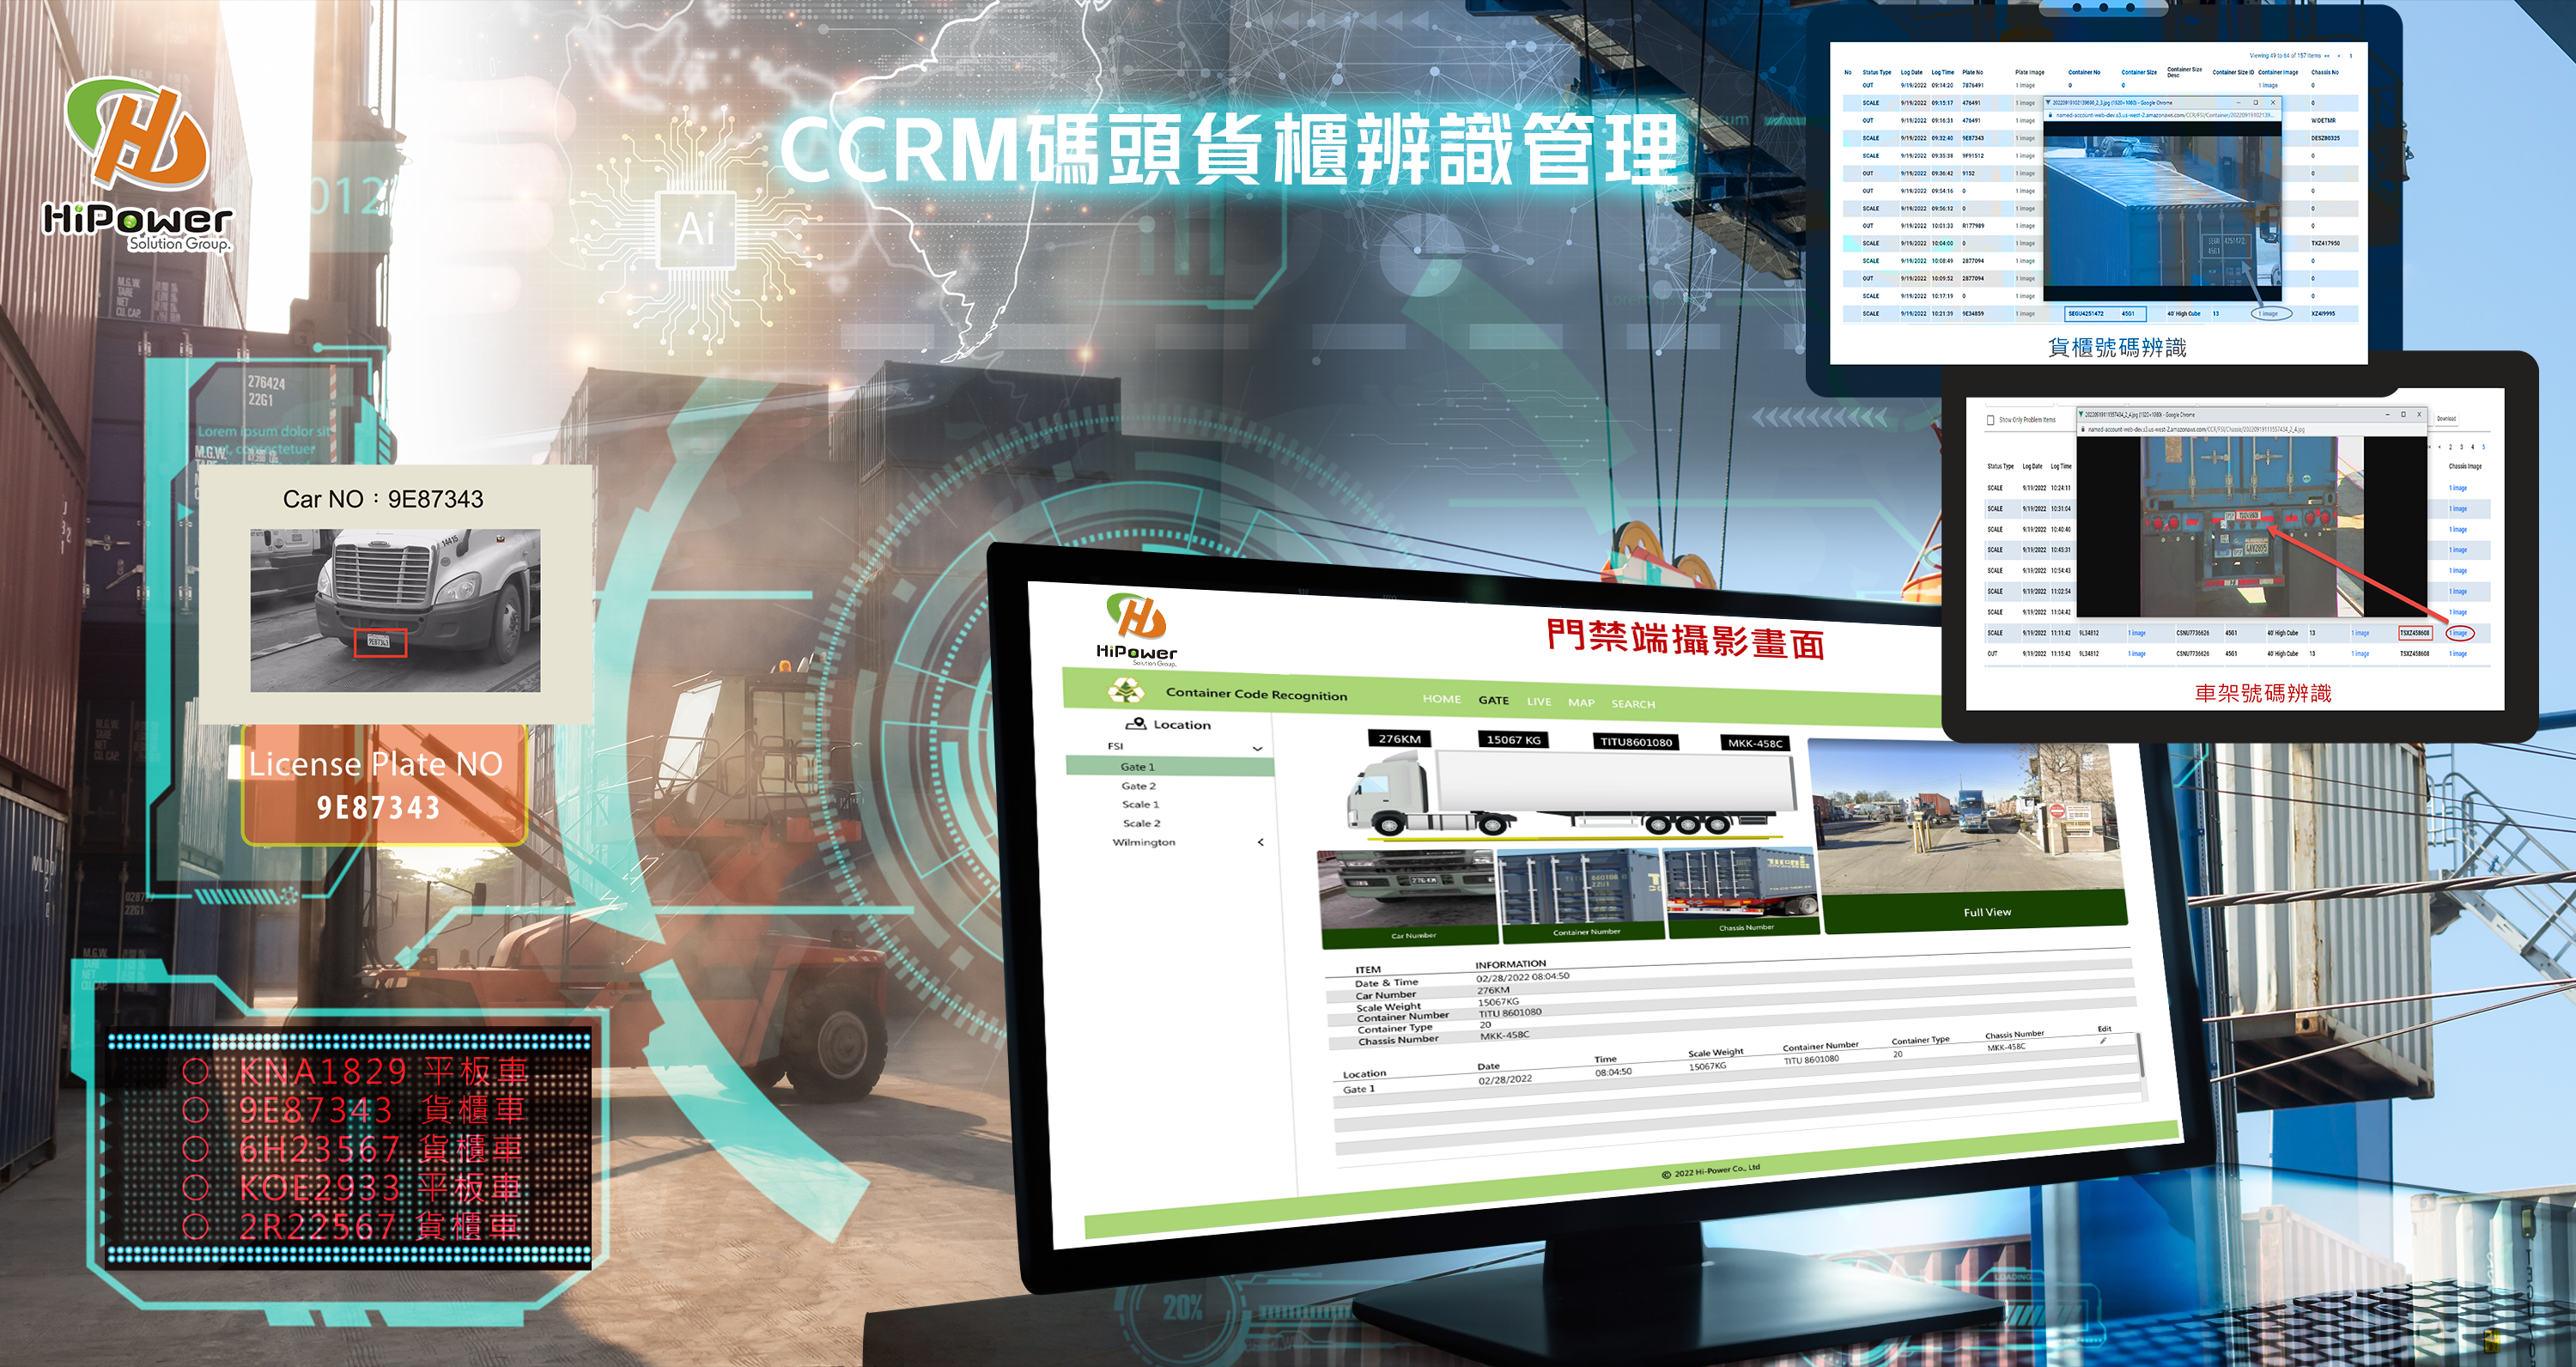 CCRM碼頭貨櫃辨識管理